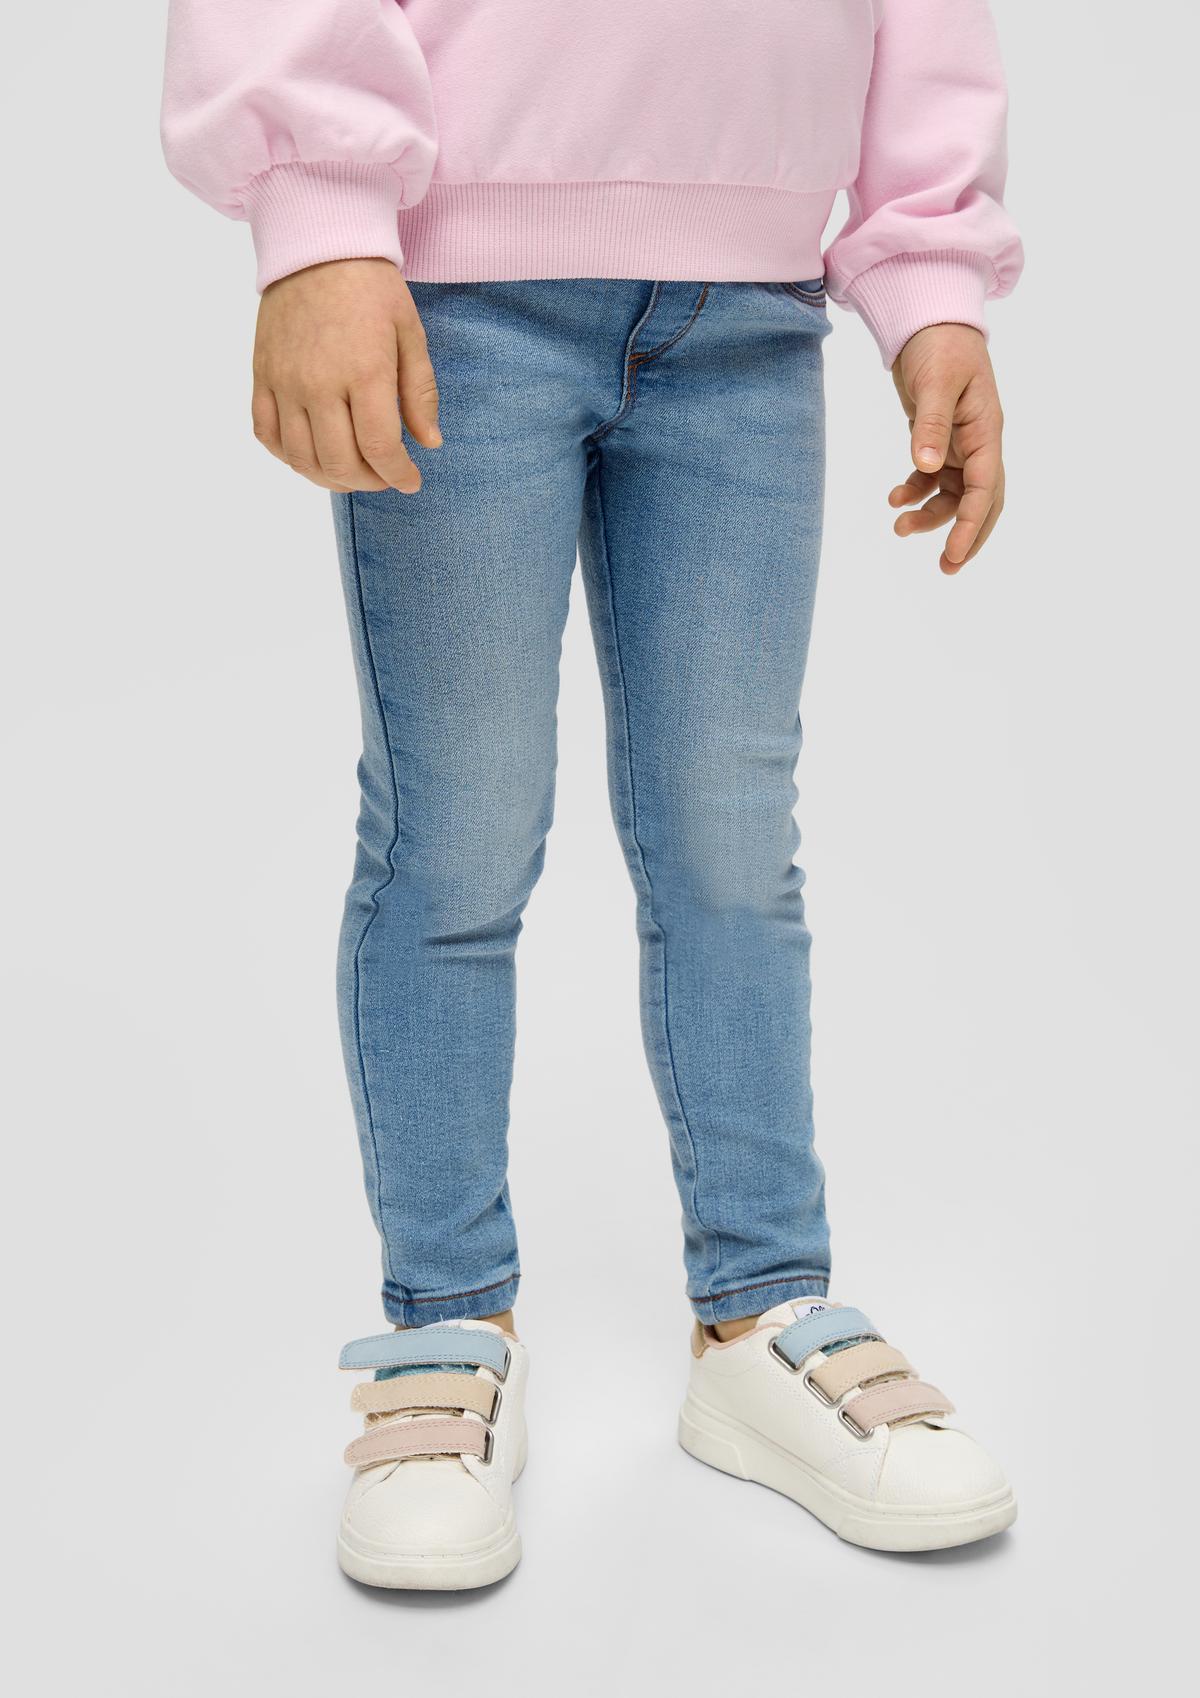 s.Oliver Jeans Treggings / Regular Fit / High Rise / Tapered Leg